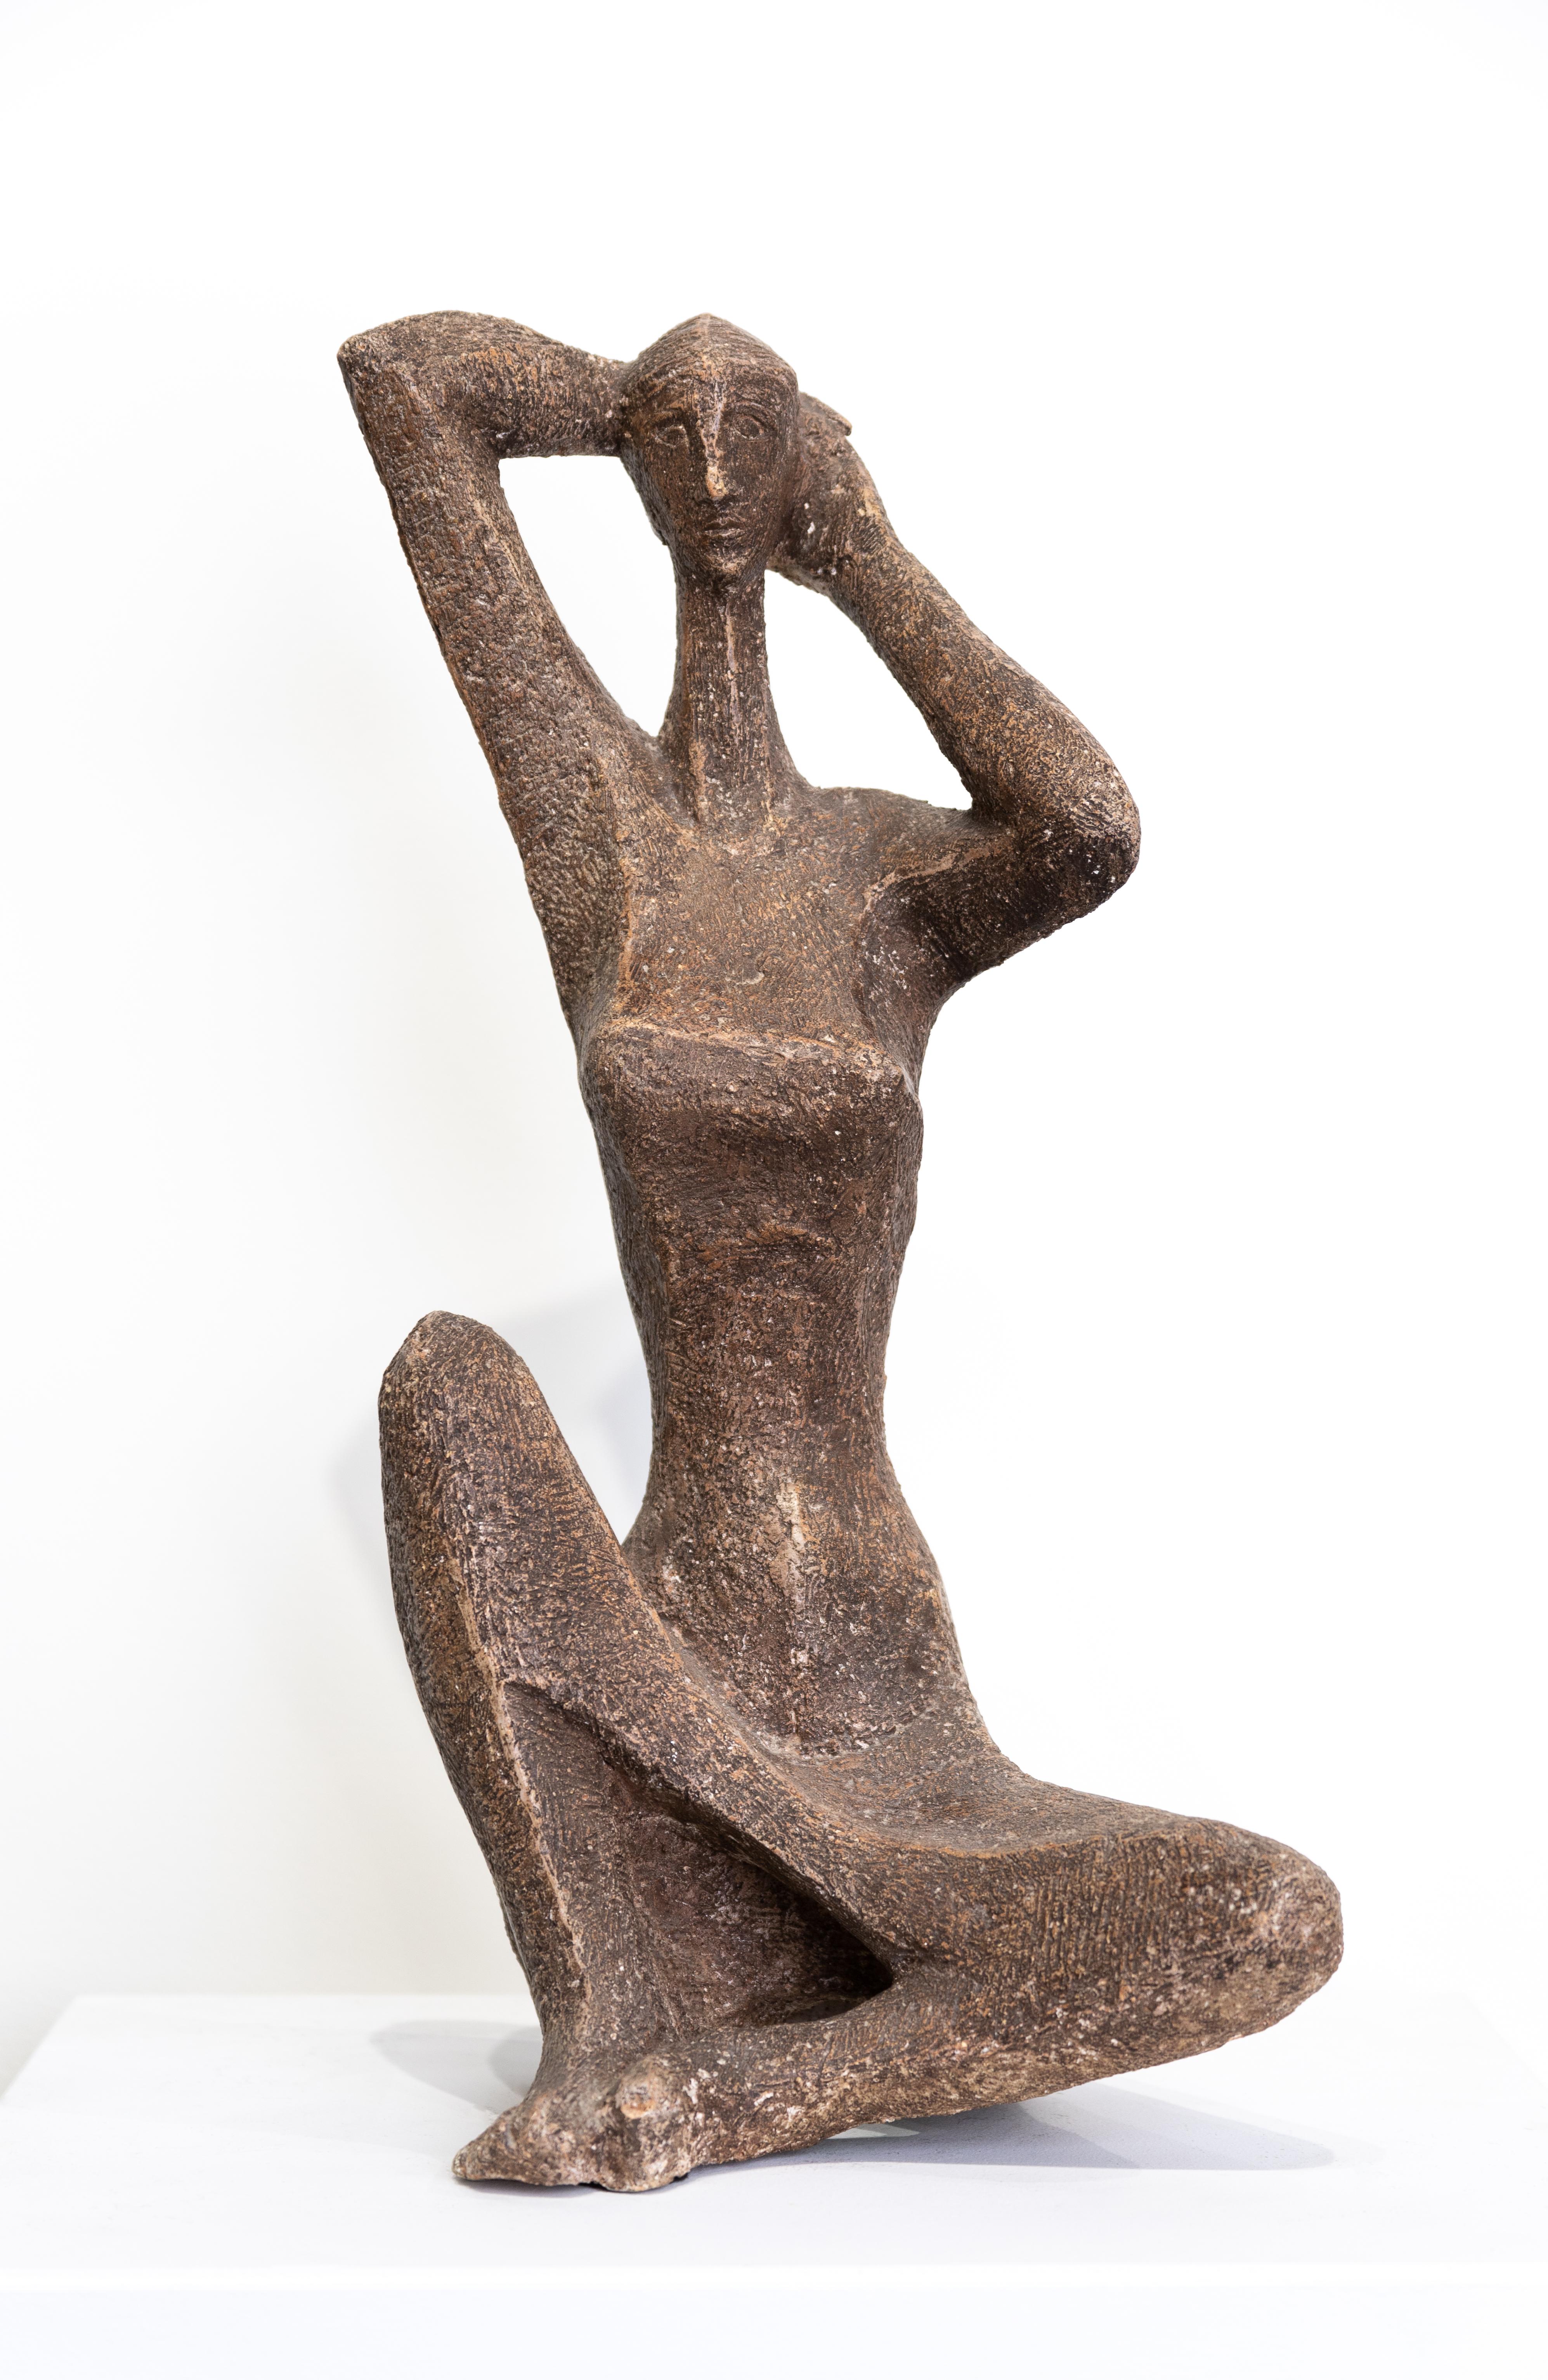 Walter Midener "Contemplation" Seated Figure Clay Sculpture Mid-Century Modern